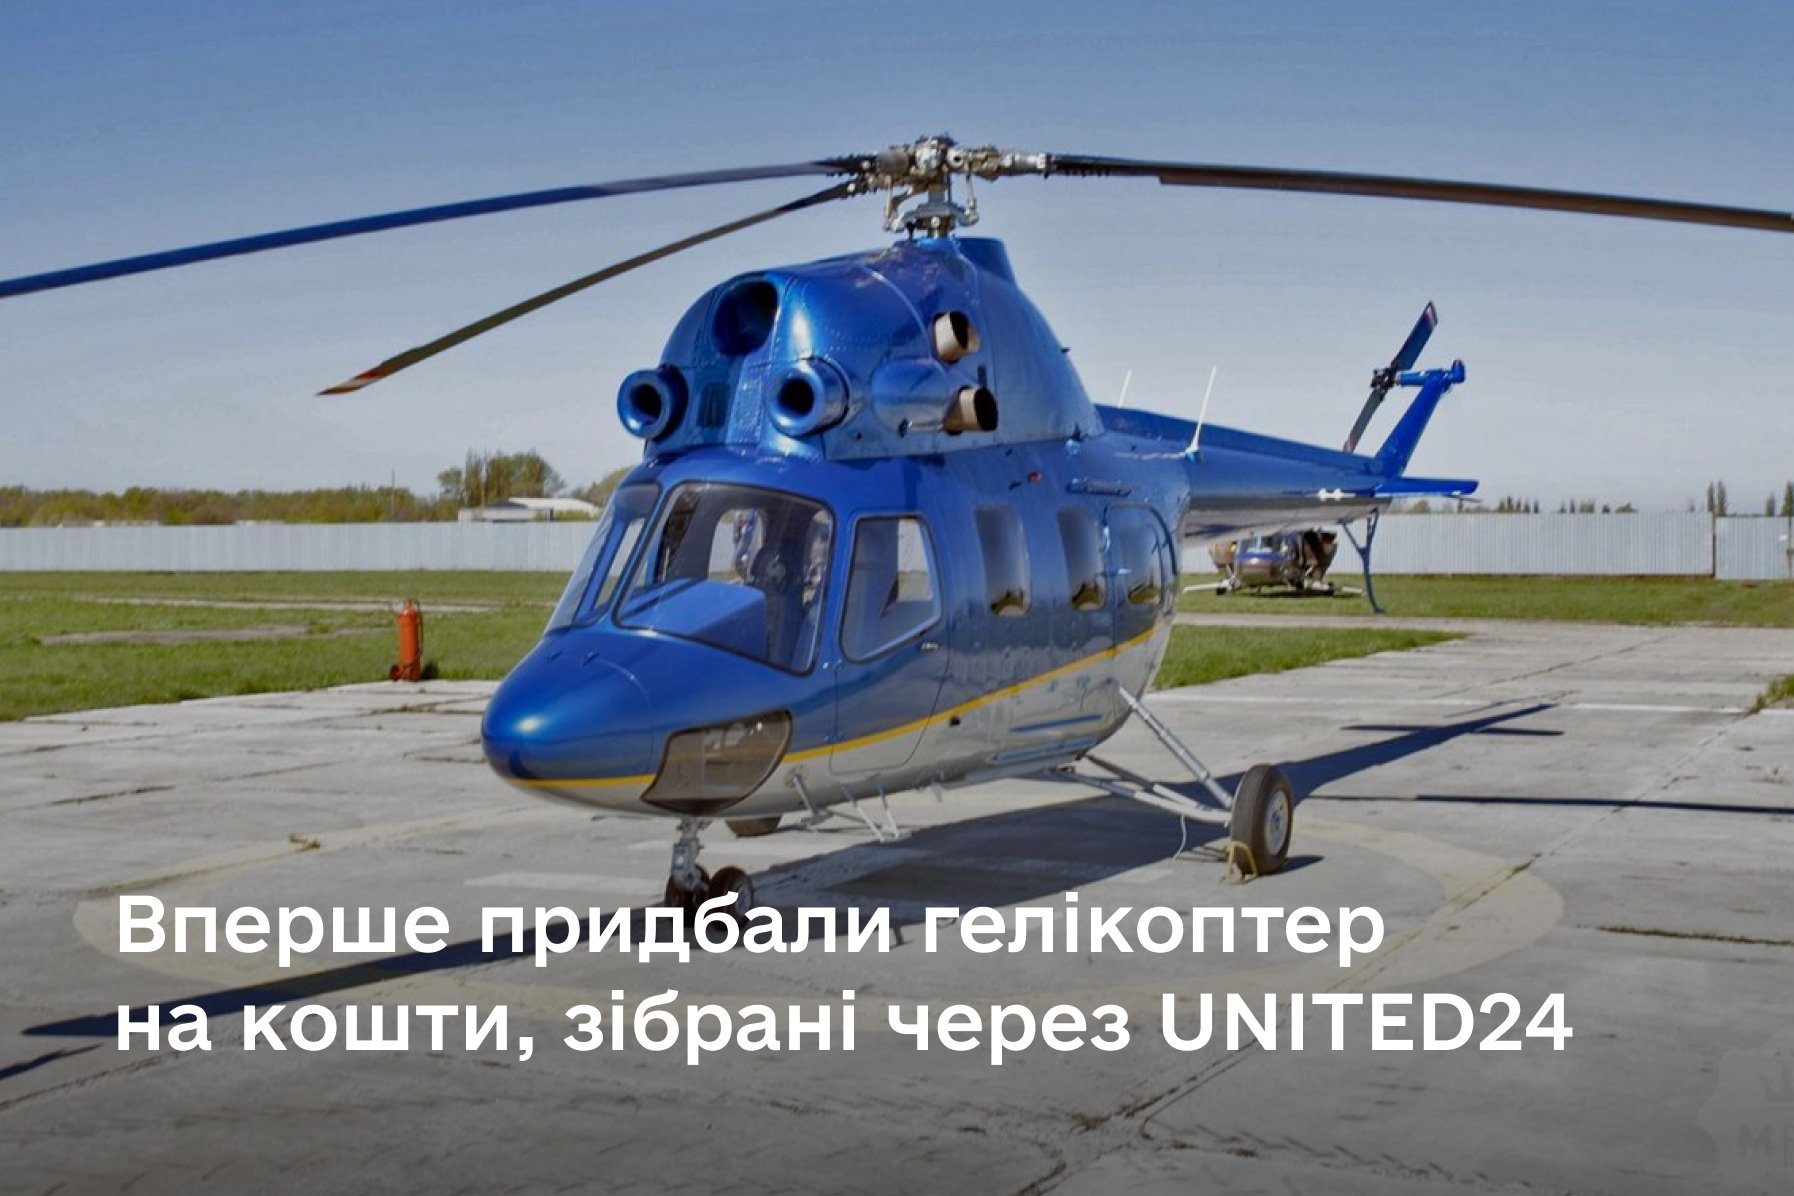 гелікоптер, Михайло Федоров, United24